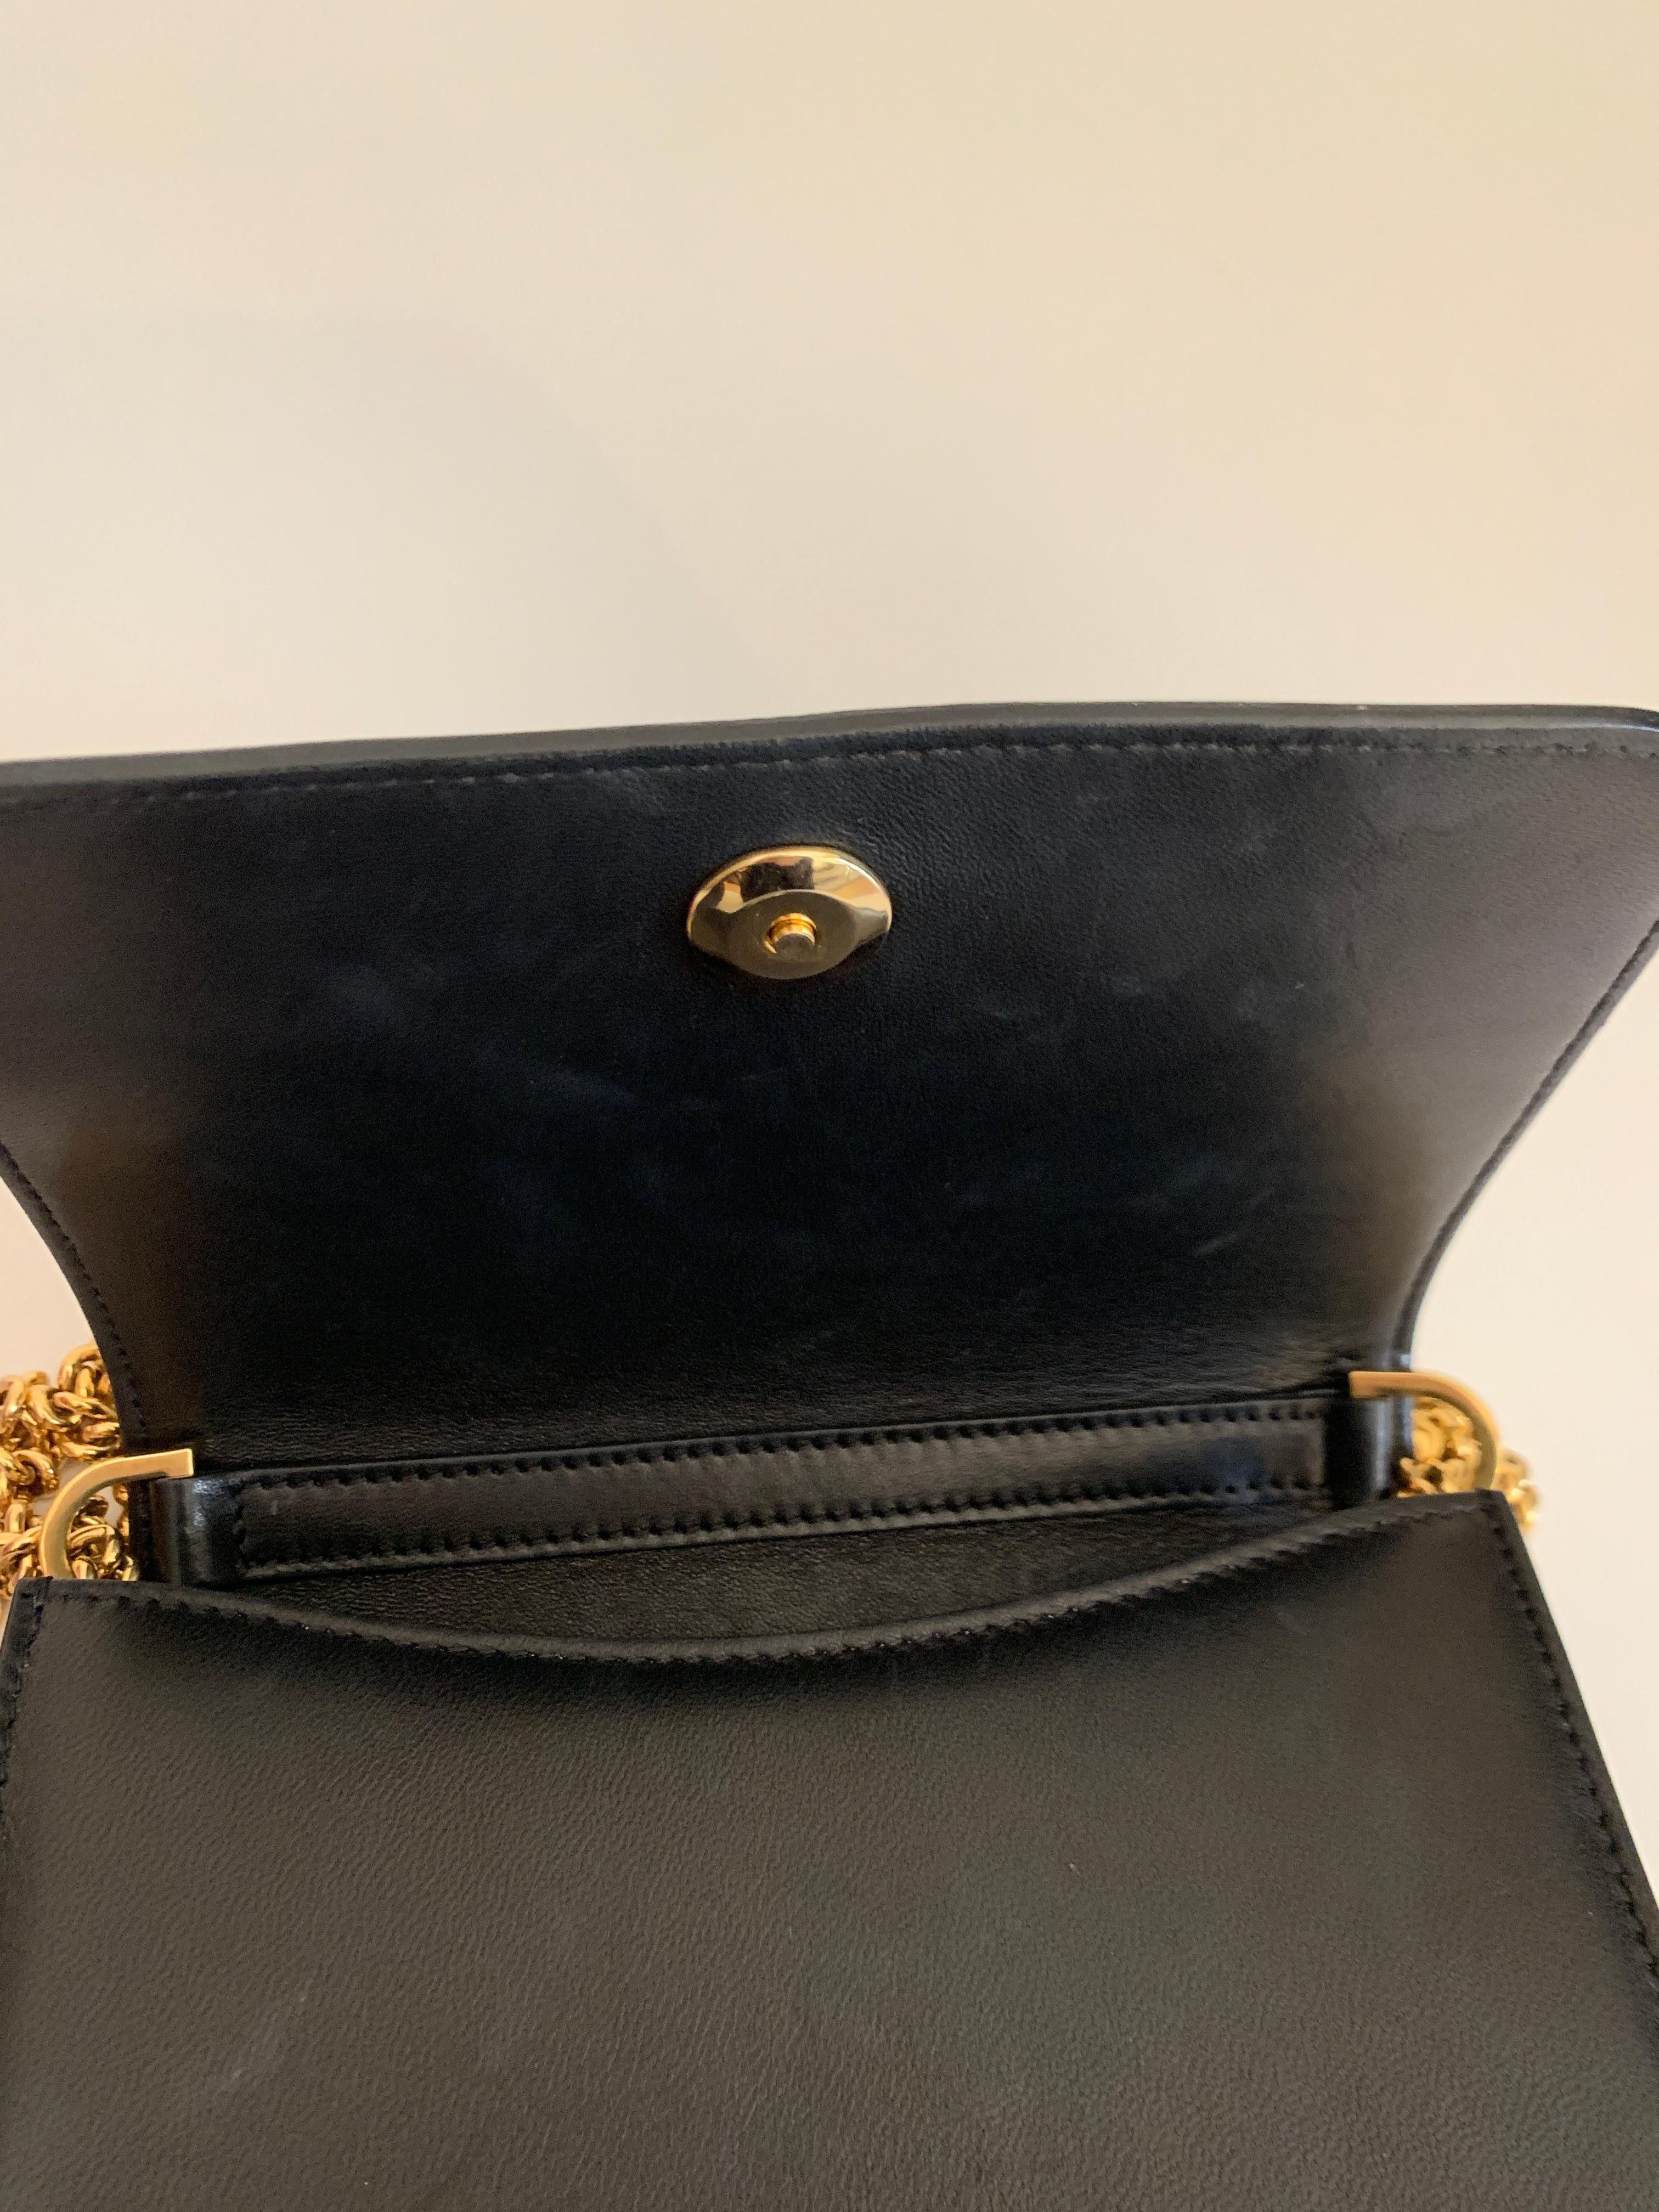 Roberto Cavalli Circus Purse Black Leather Gold Animal Embellishment Chain Strap For Sale 2